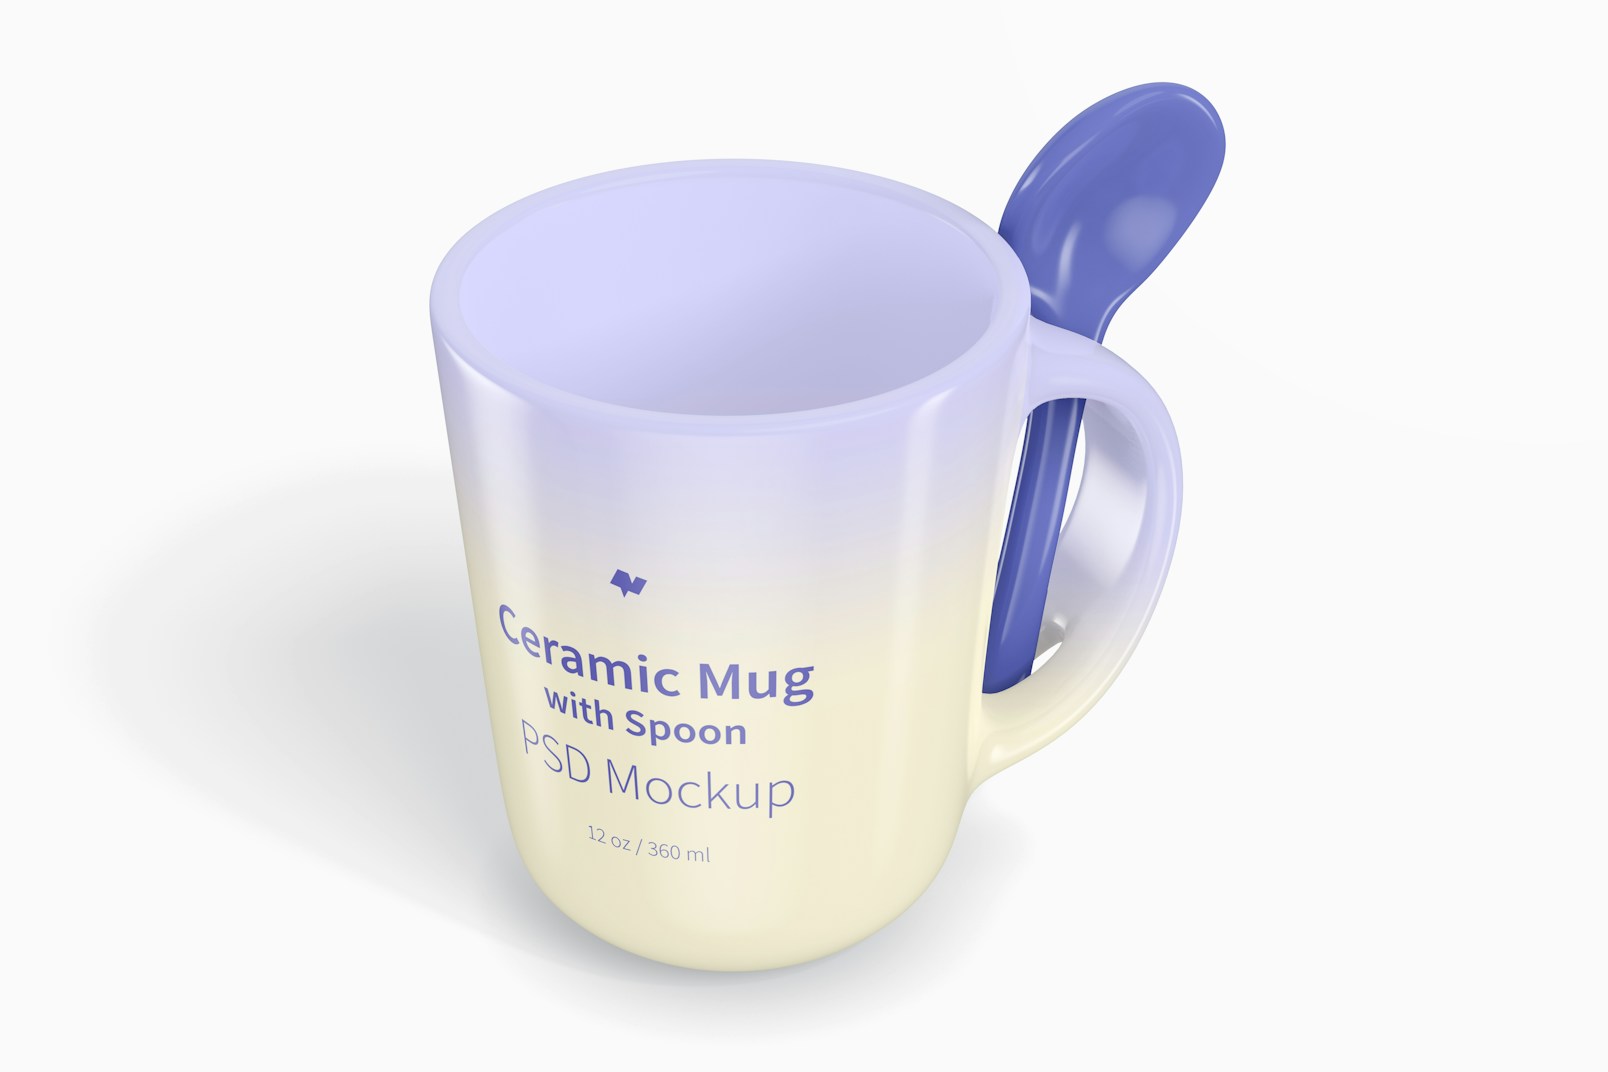 12 oz Ceramic Mug with Spoon Mockup, Isometric Left View